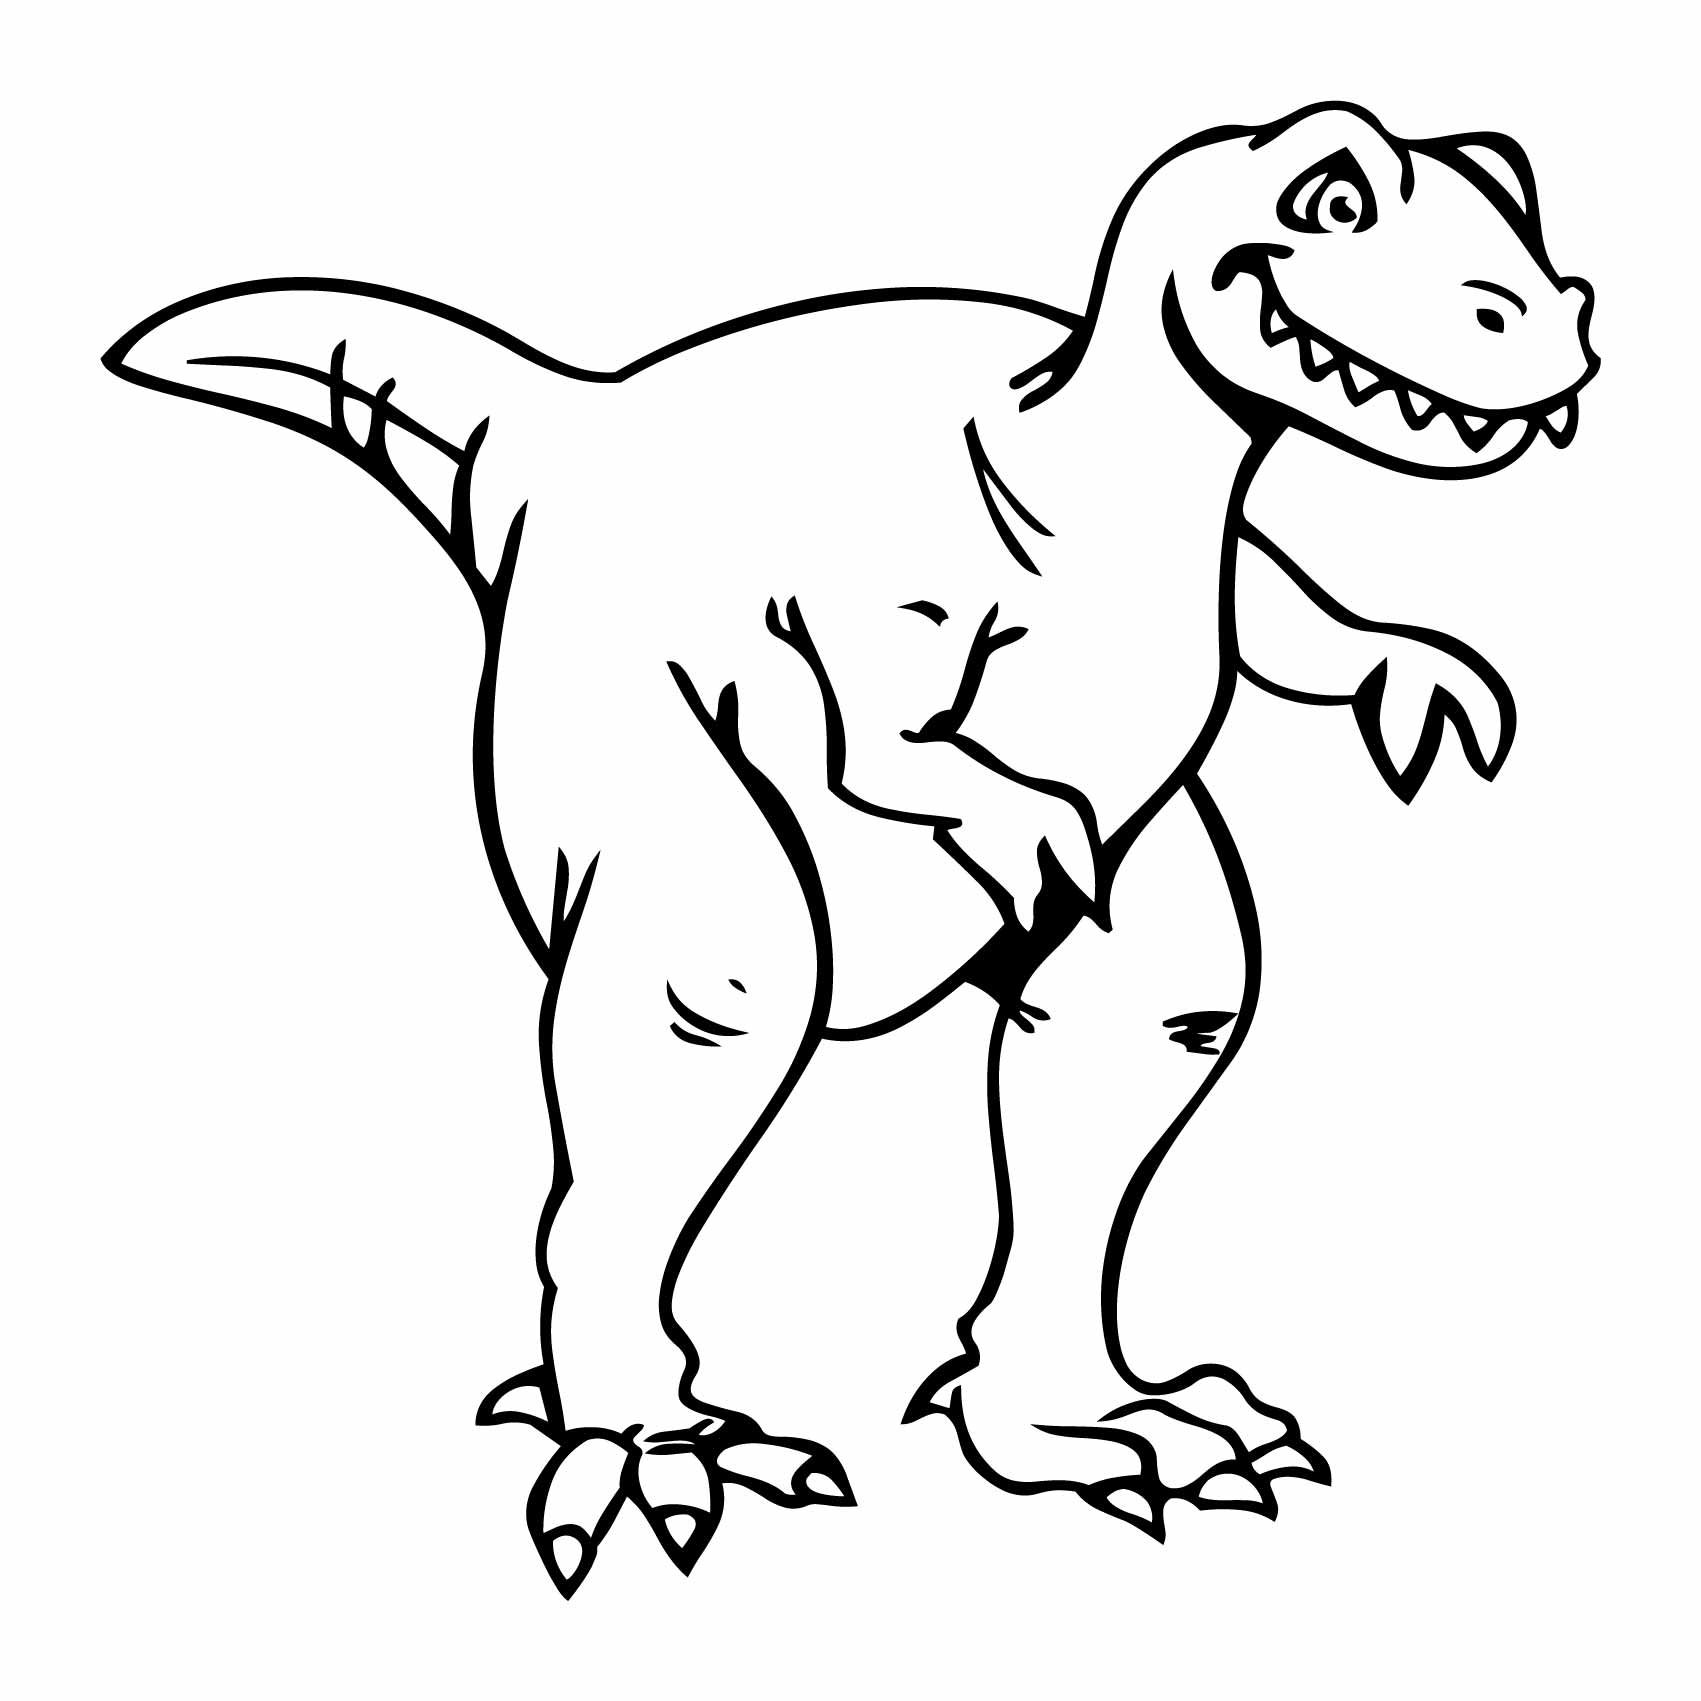 stickers-dinosaure-dessin-t-rex-ref17dinosaure-autocollant-muraux-chambre-enfant-sticker-mural-geant-dinosaures-deco-garçon-fille-(2)